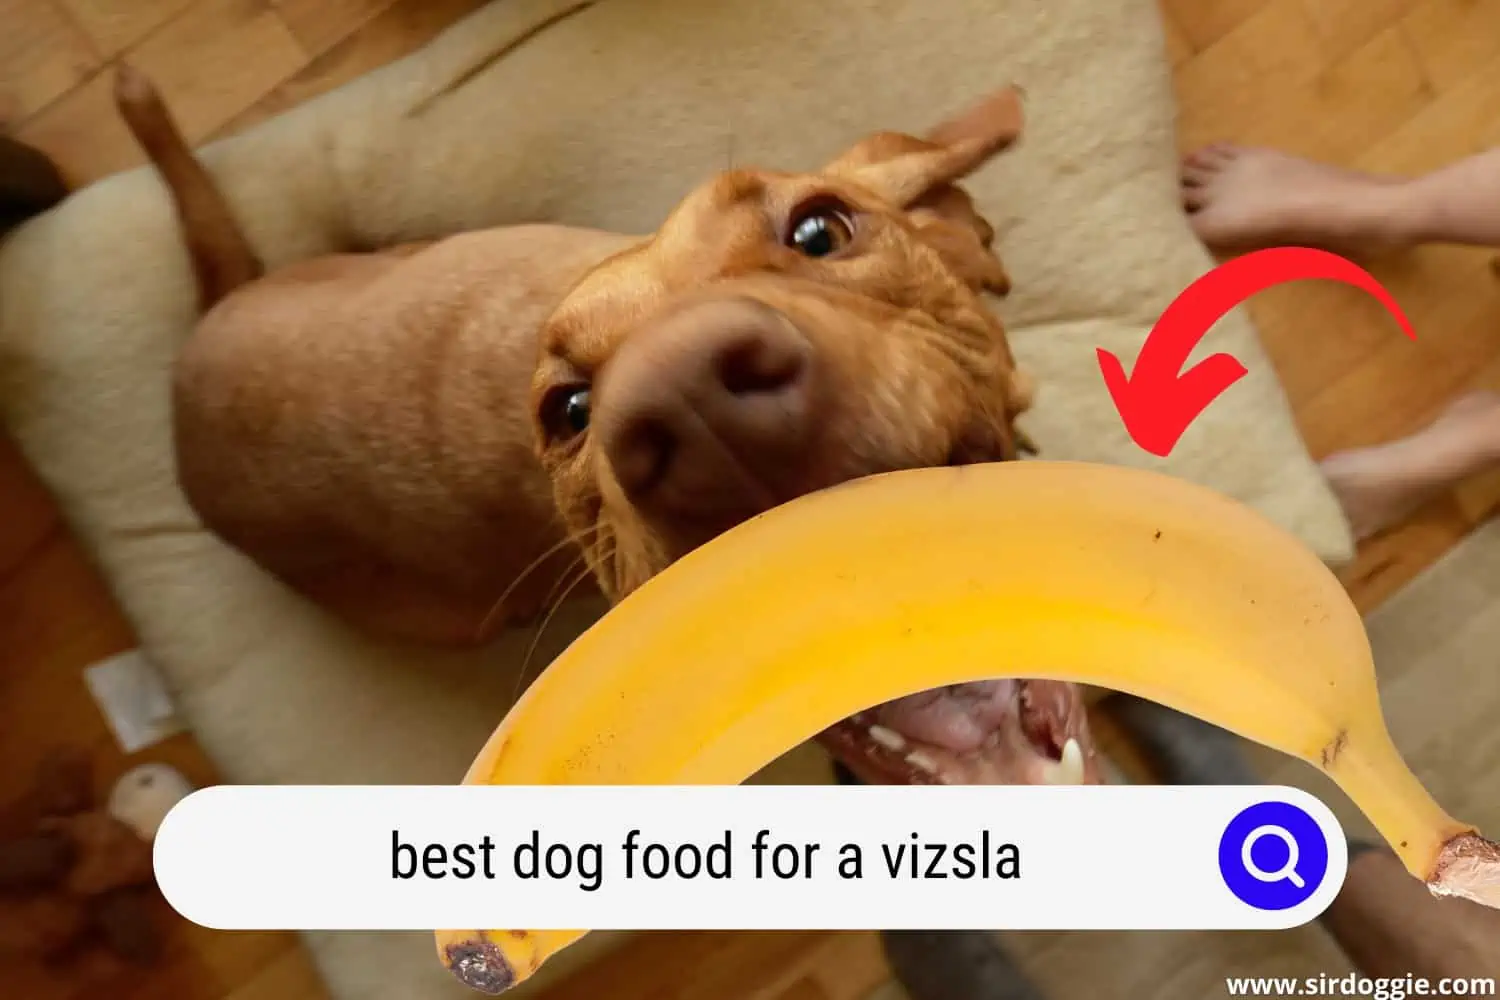 A Vizsla dog catching the banana to eat